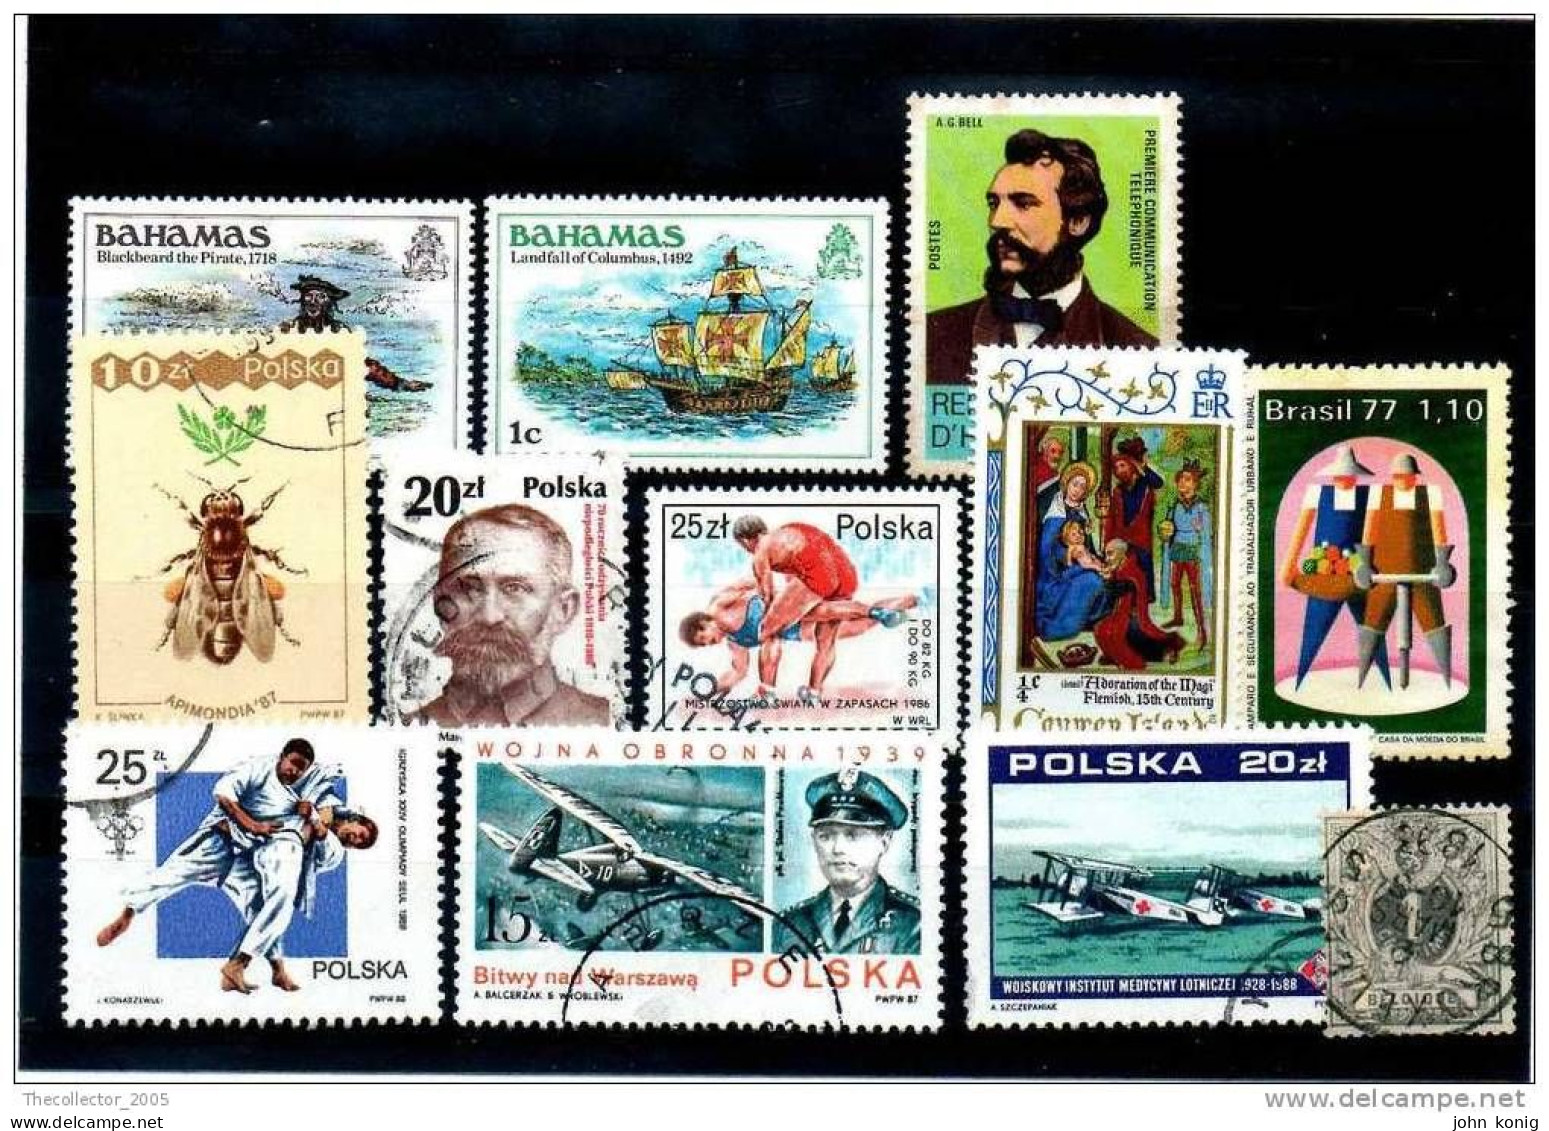 POLSKA BAHAMAS BRASIL - BRASILE POLONIA BAHAMAS - Lotto Francobolli Nuovi & Usati - Mixed Lot Of New & Used Stamps - Collections